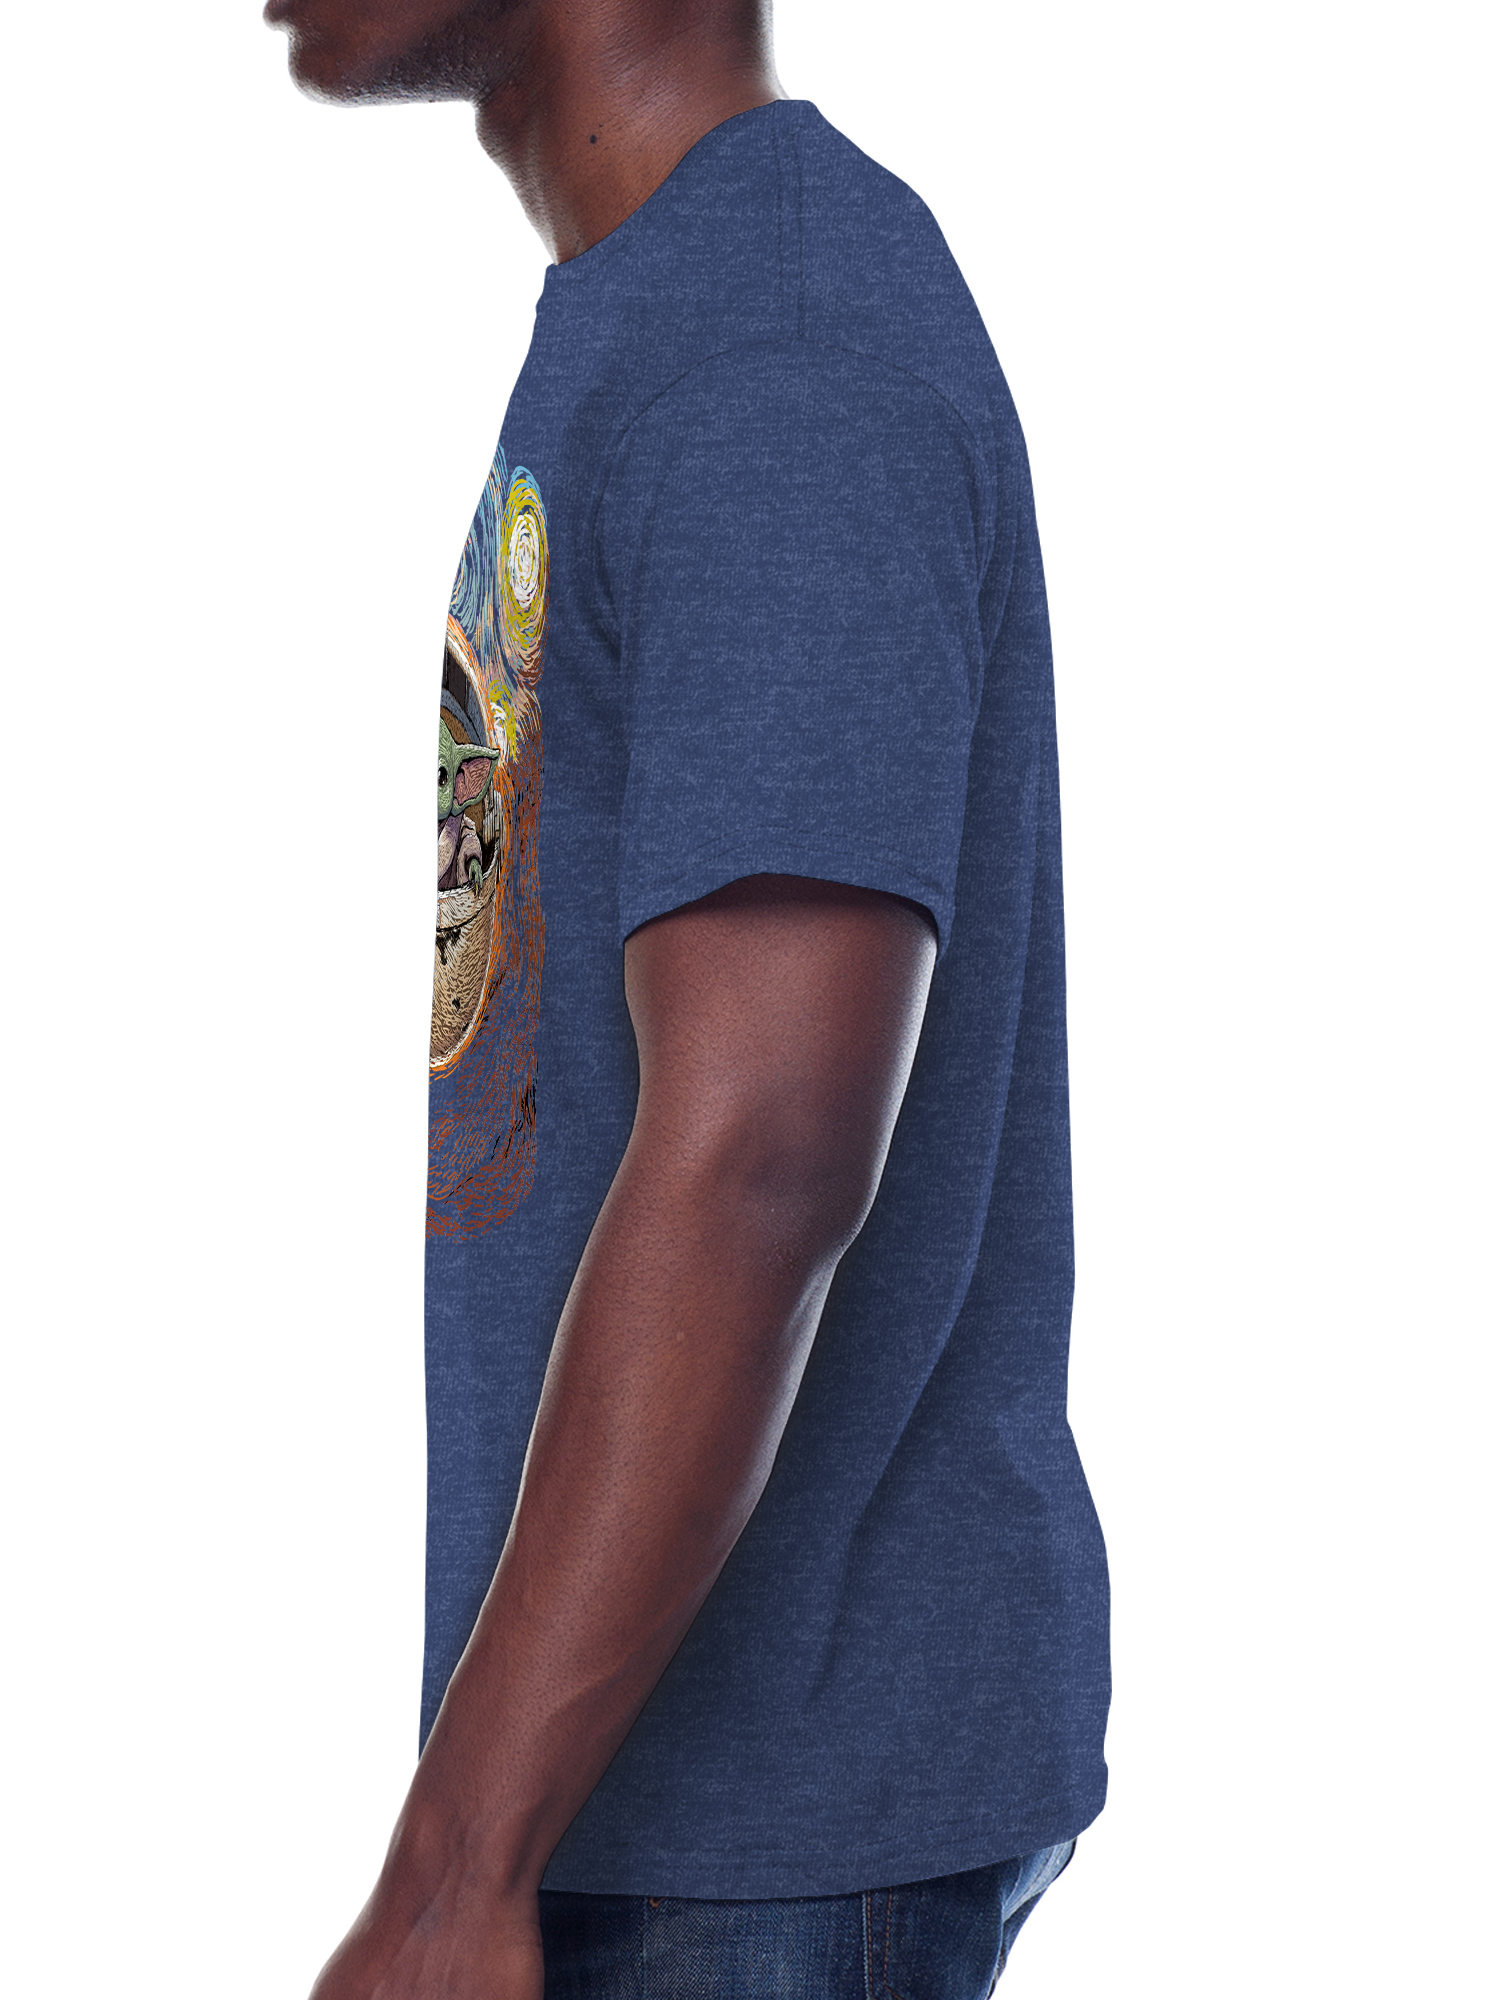 Star Wars Baby Yoda Standing & Starry Night Men's and Big Men's Graphic T-Shirt, 2-Pack - image 3 of 14